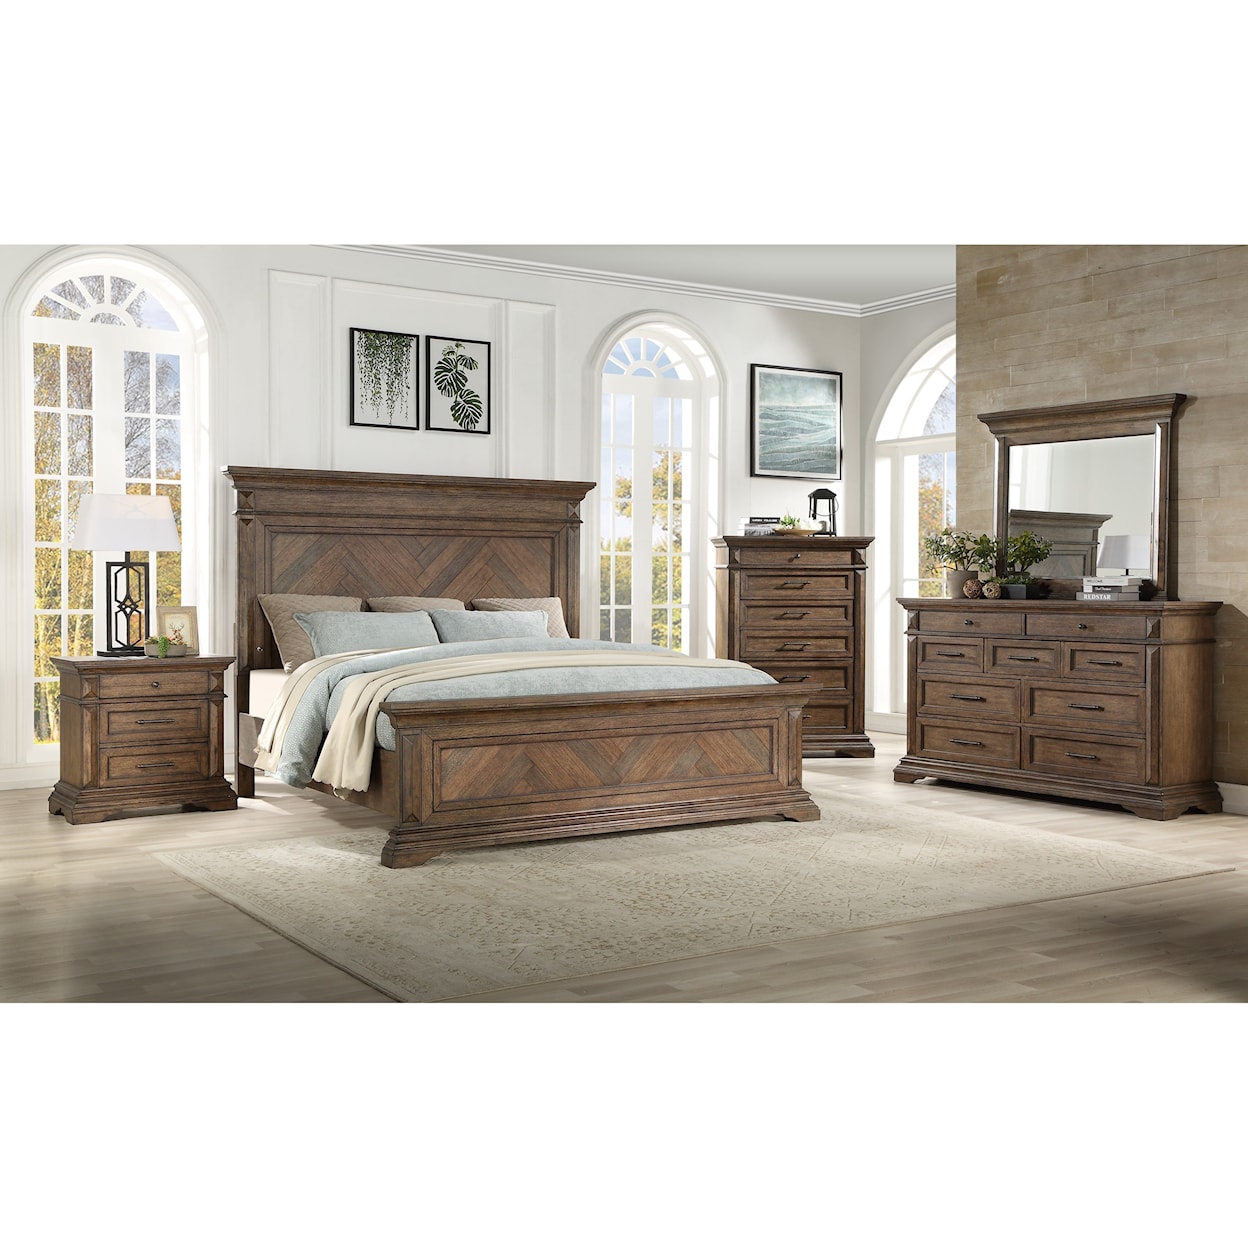 New Classic Furniture Mar Vista Queen Bedroom Group